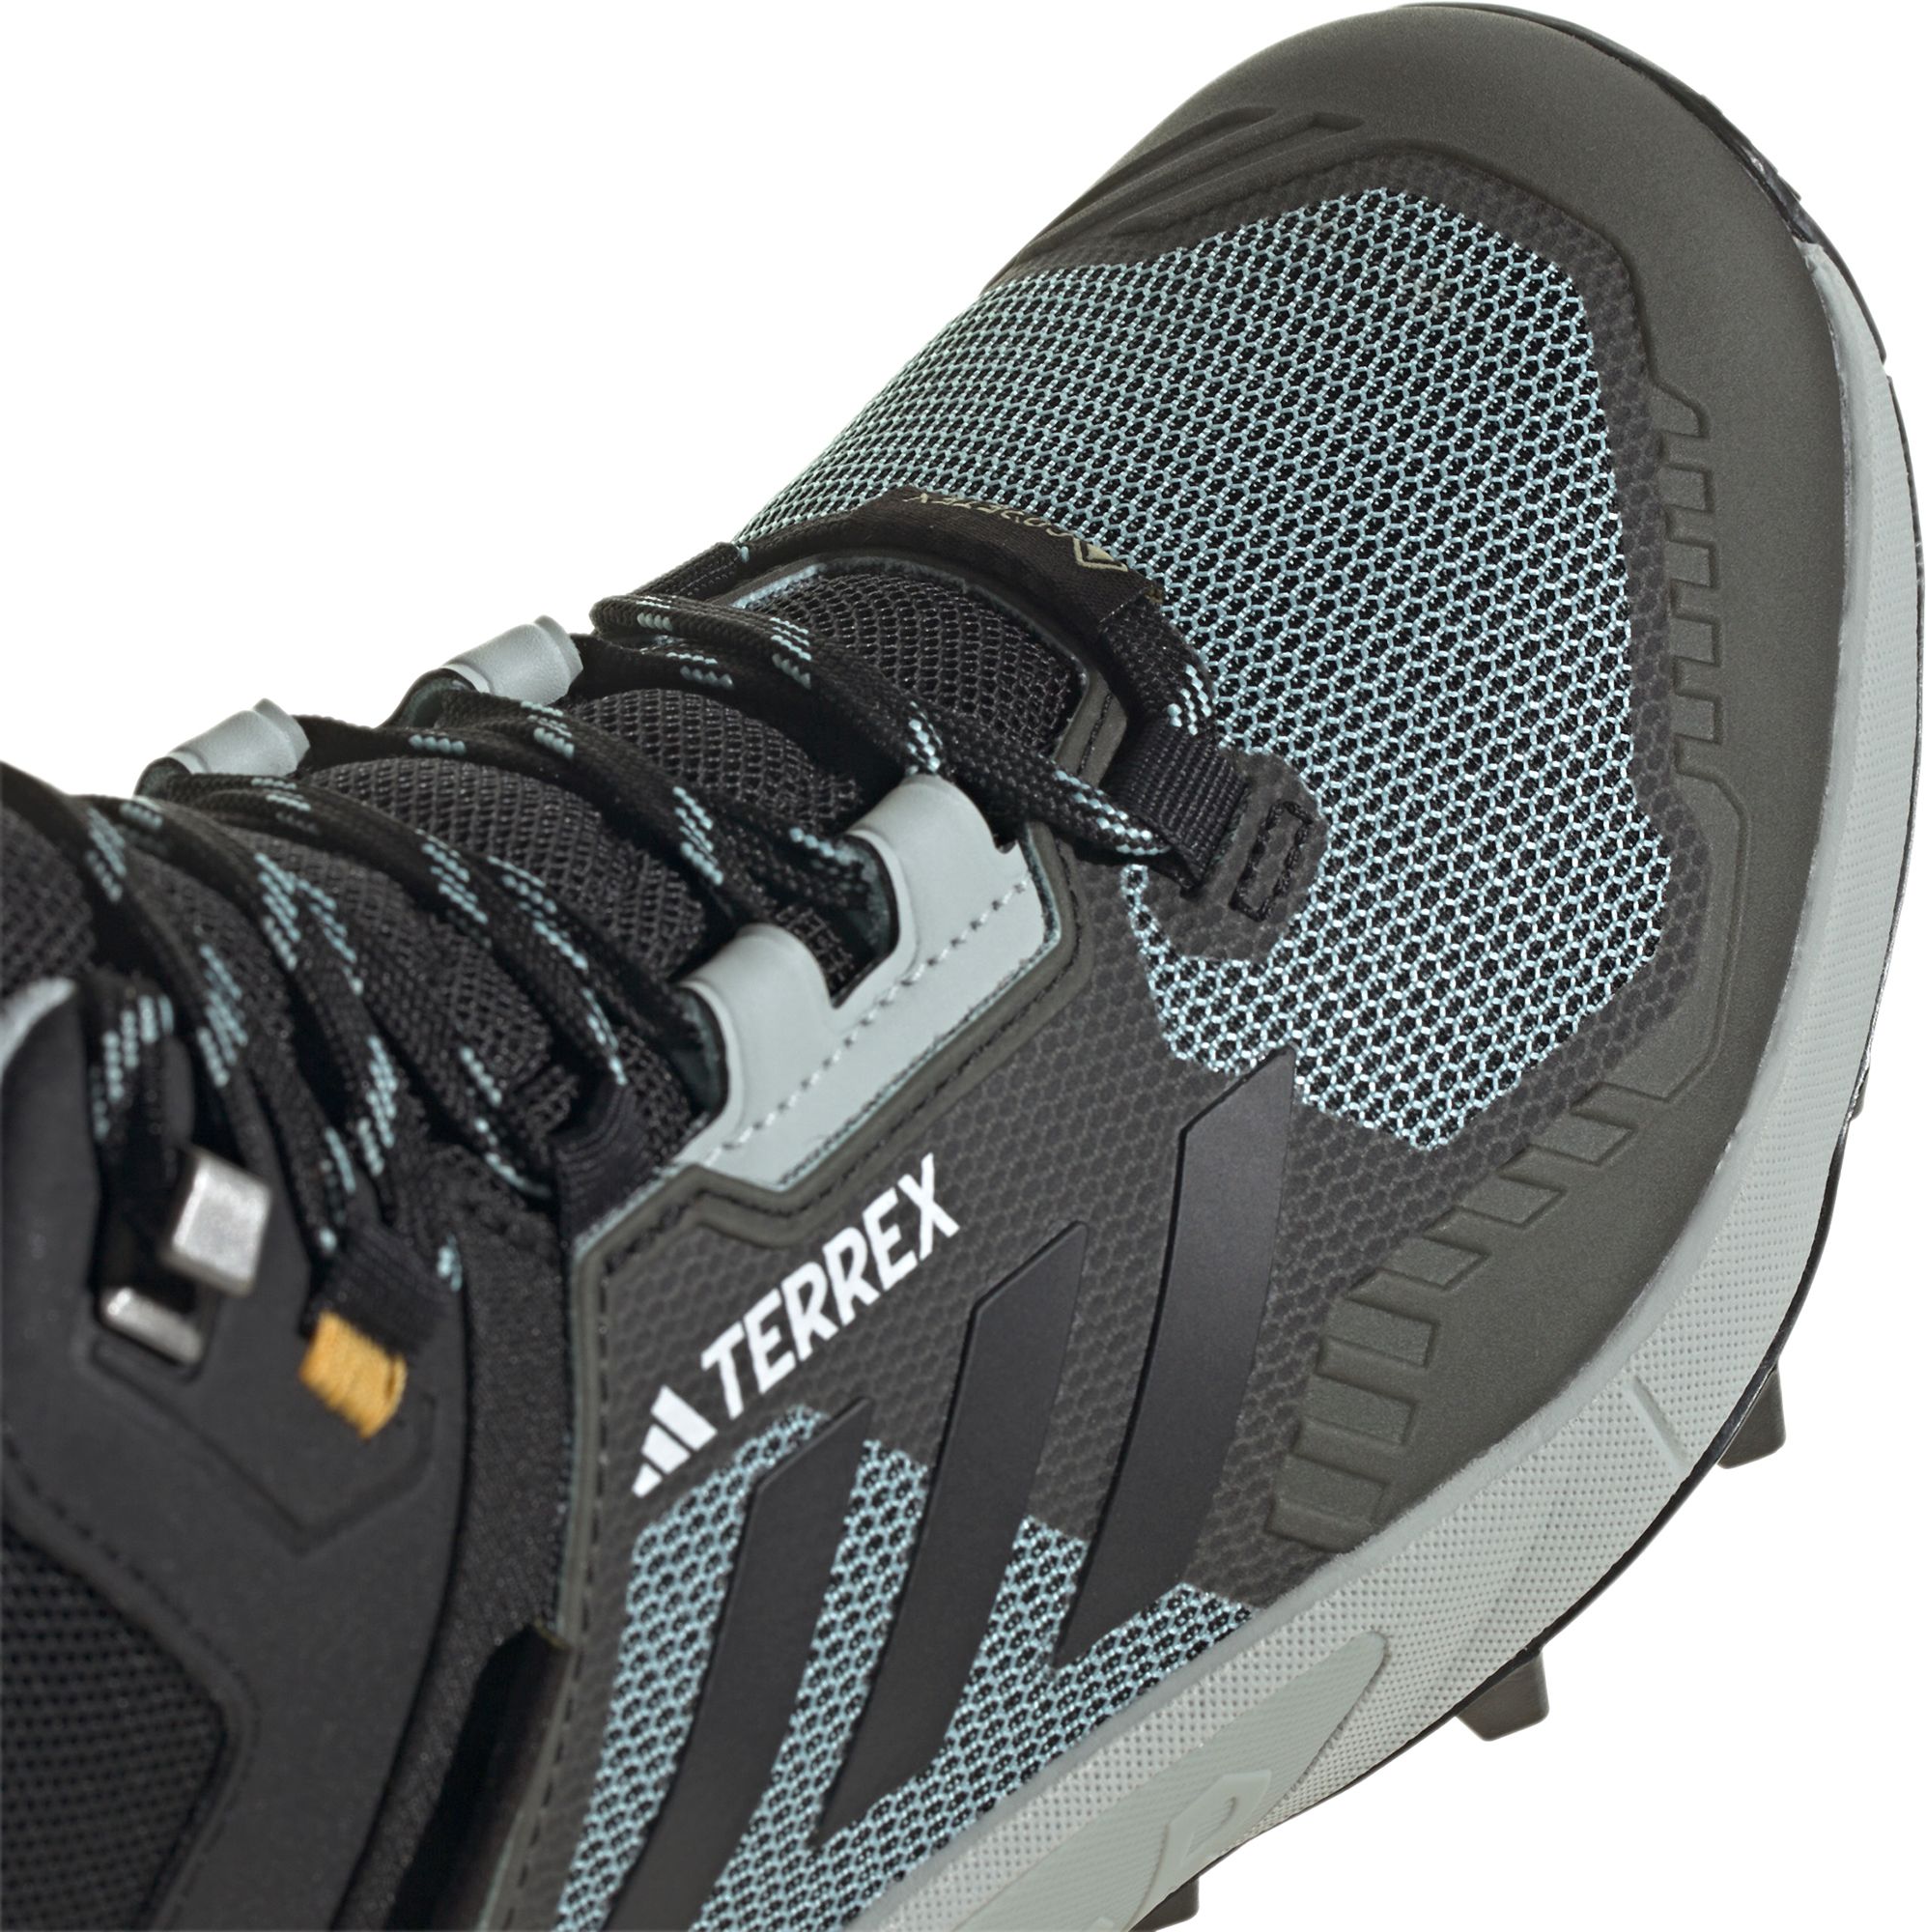 adidas Women's Terrex Swift R3 GORE-TEX Mid Hiking Shoes